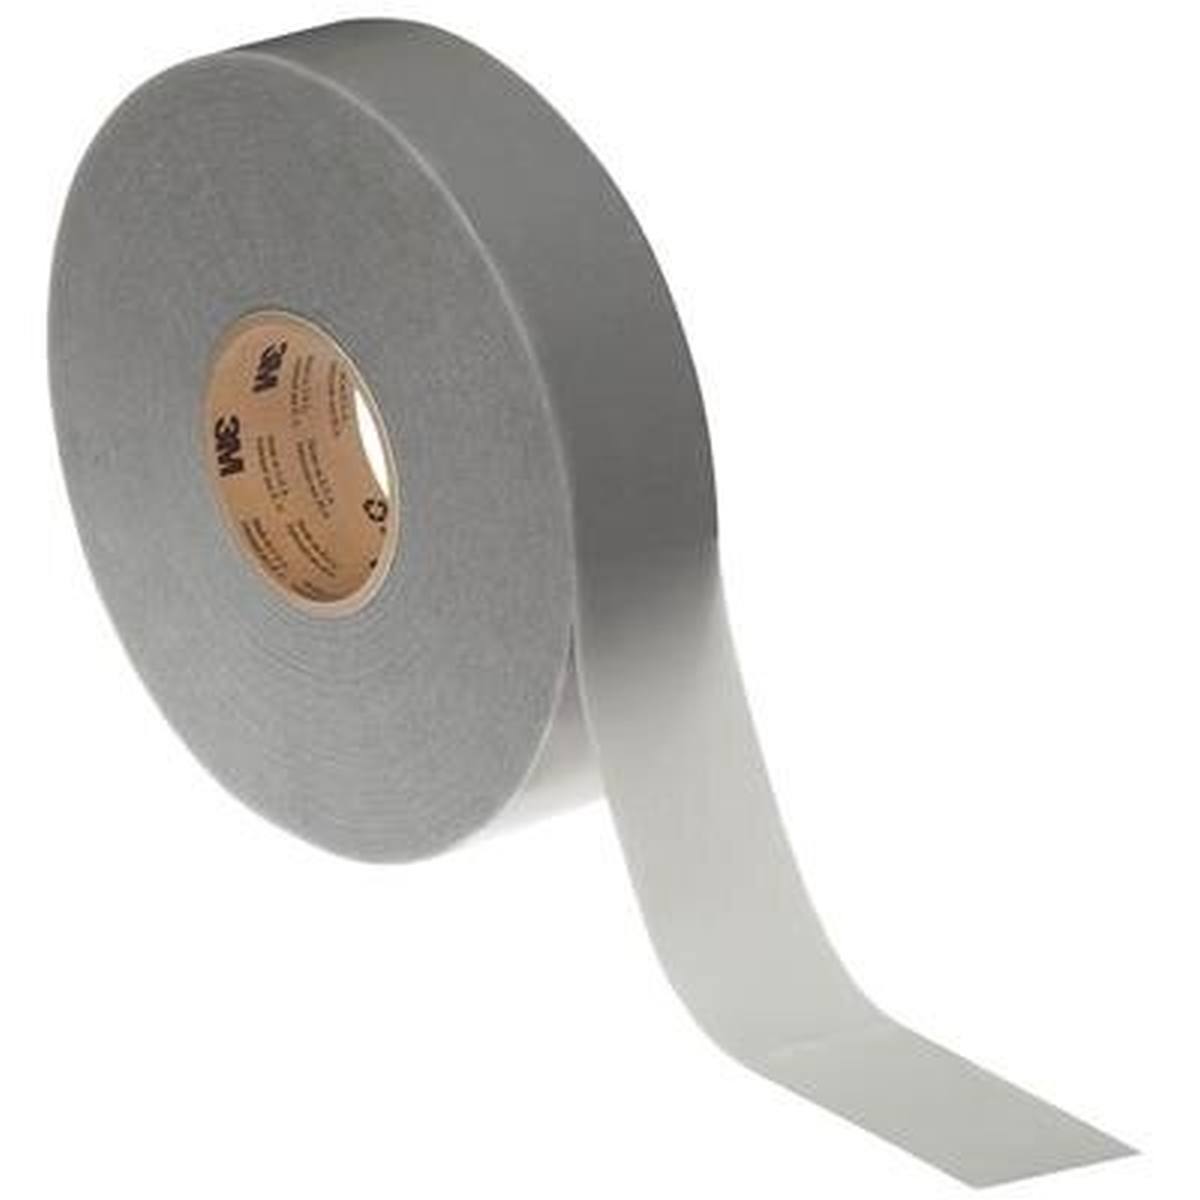 3M high performance sealing tape 4411G, 75 mm x 33 m, 1 mm, gray